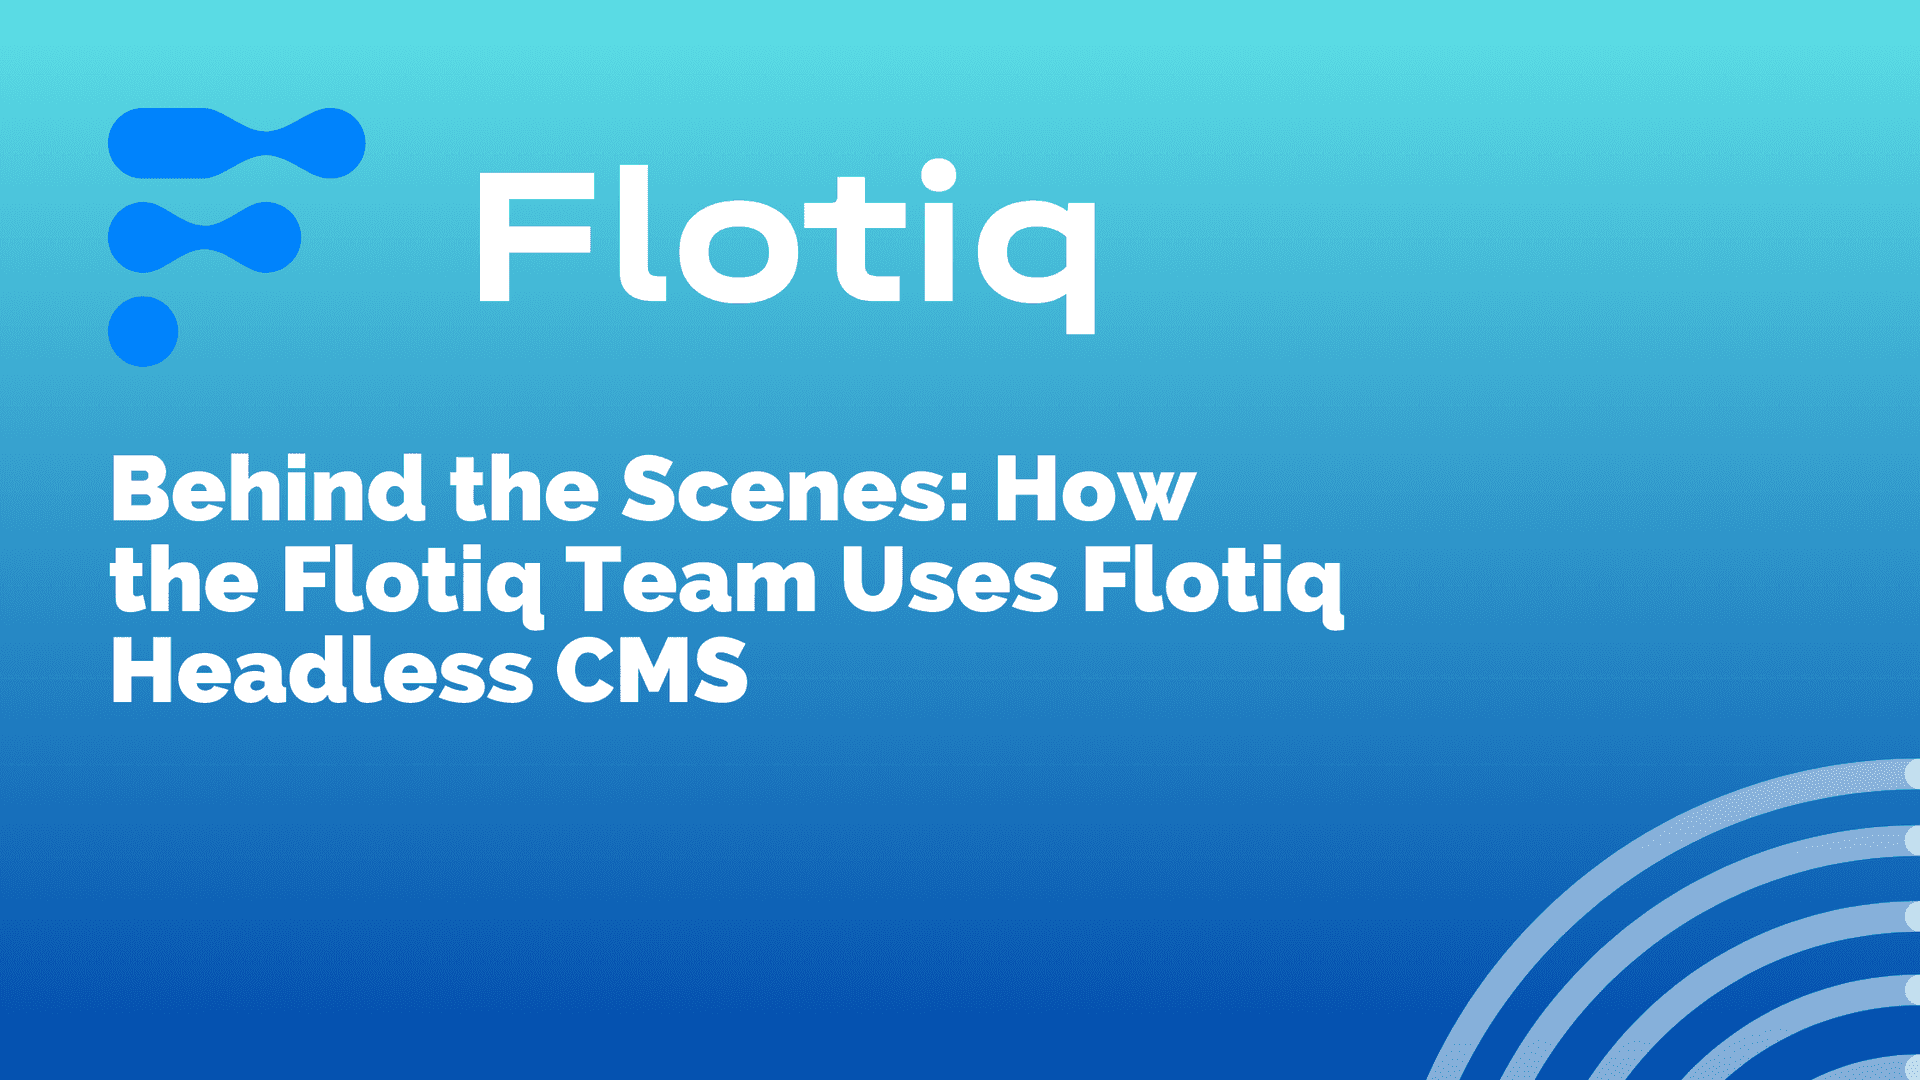 Behind the Scenes: How the Flotiq Team Uses Flotiq Headless CMS